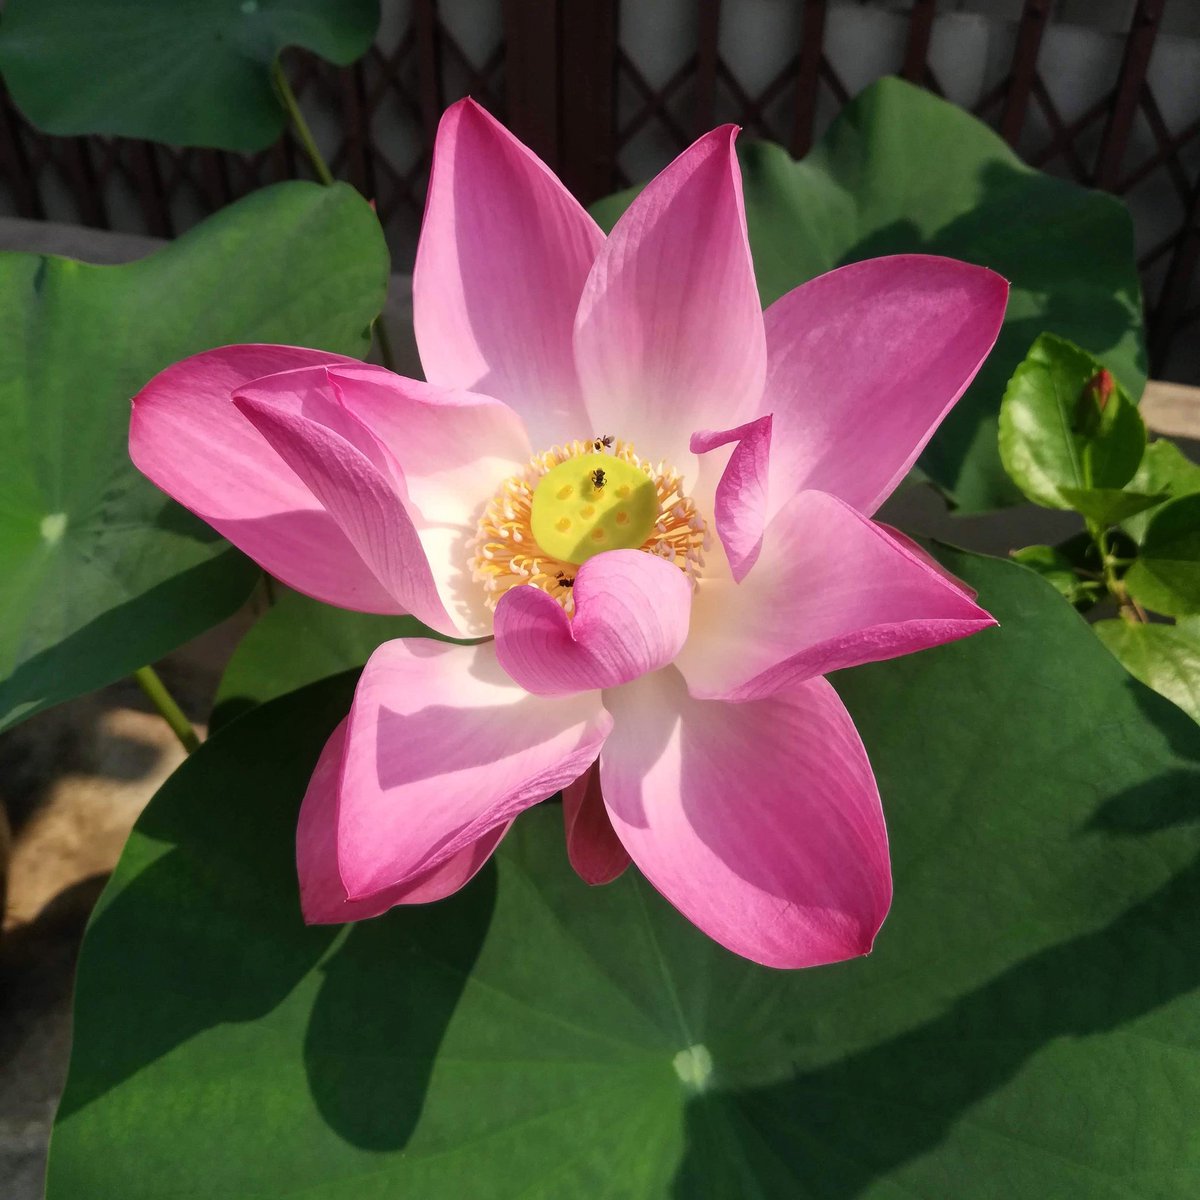 '𝘏𝘢𝘱𝘱𝘪𝘯𝘦𝘴𝘴 𝘩𝘦𝘭𝘥 𝘪𝘴 𝘵𝘩𝘦 𝘴𝘦𝘦𝘥; 𝘩𝘢𝘱𝘱𝘪𝘯𝘦𝘴𝘴 𝘴𝘩𝘢𝘳𝘦𝘥 𝘪𝘴 𝘵𝘩𝘦 𝘧𝘭𝘰𝘸𝘦𝘳'
•
#nelumbonucifera #lotusflower #bloom #bloominbeautiful #watsaket #feb2020 #bangkok #thailand #goldenmounttemple #inspirationalmoments #johnharriganquote